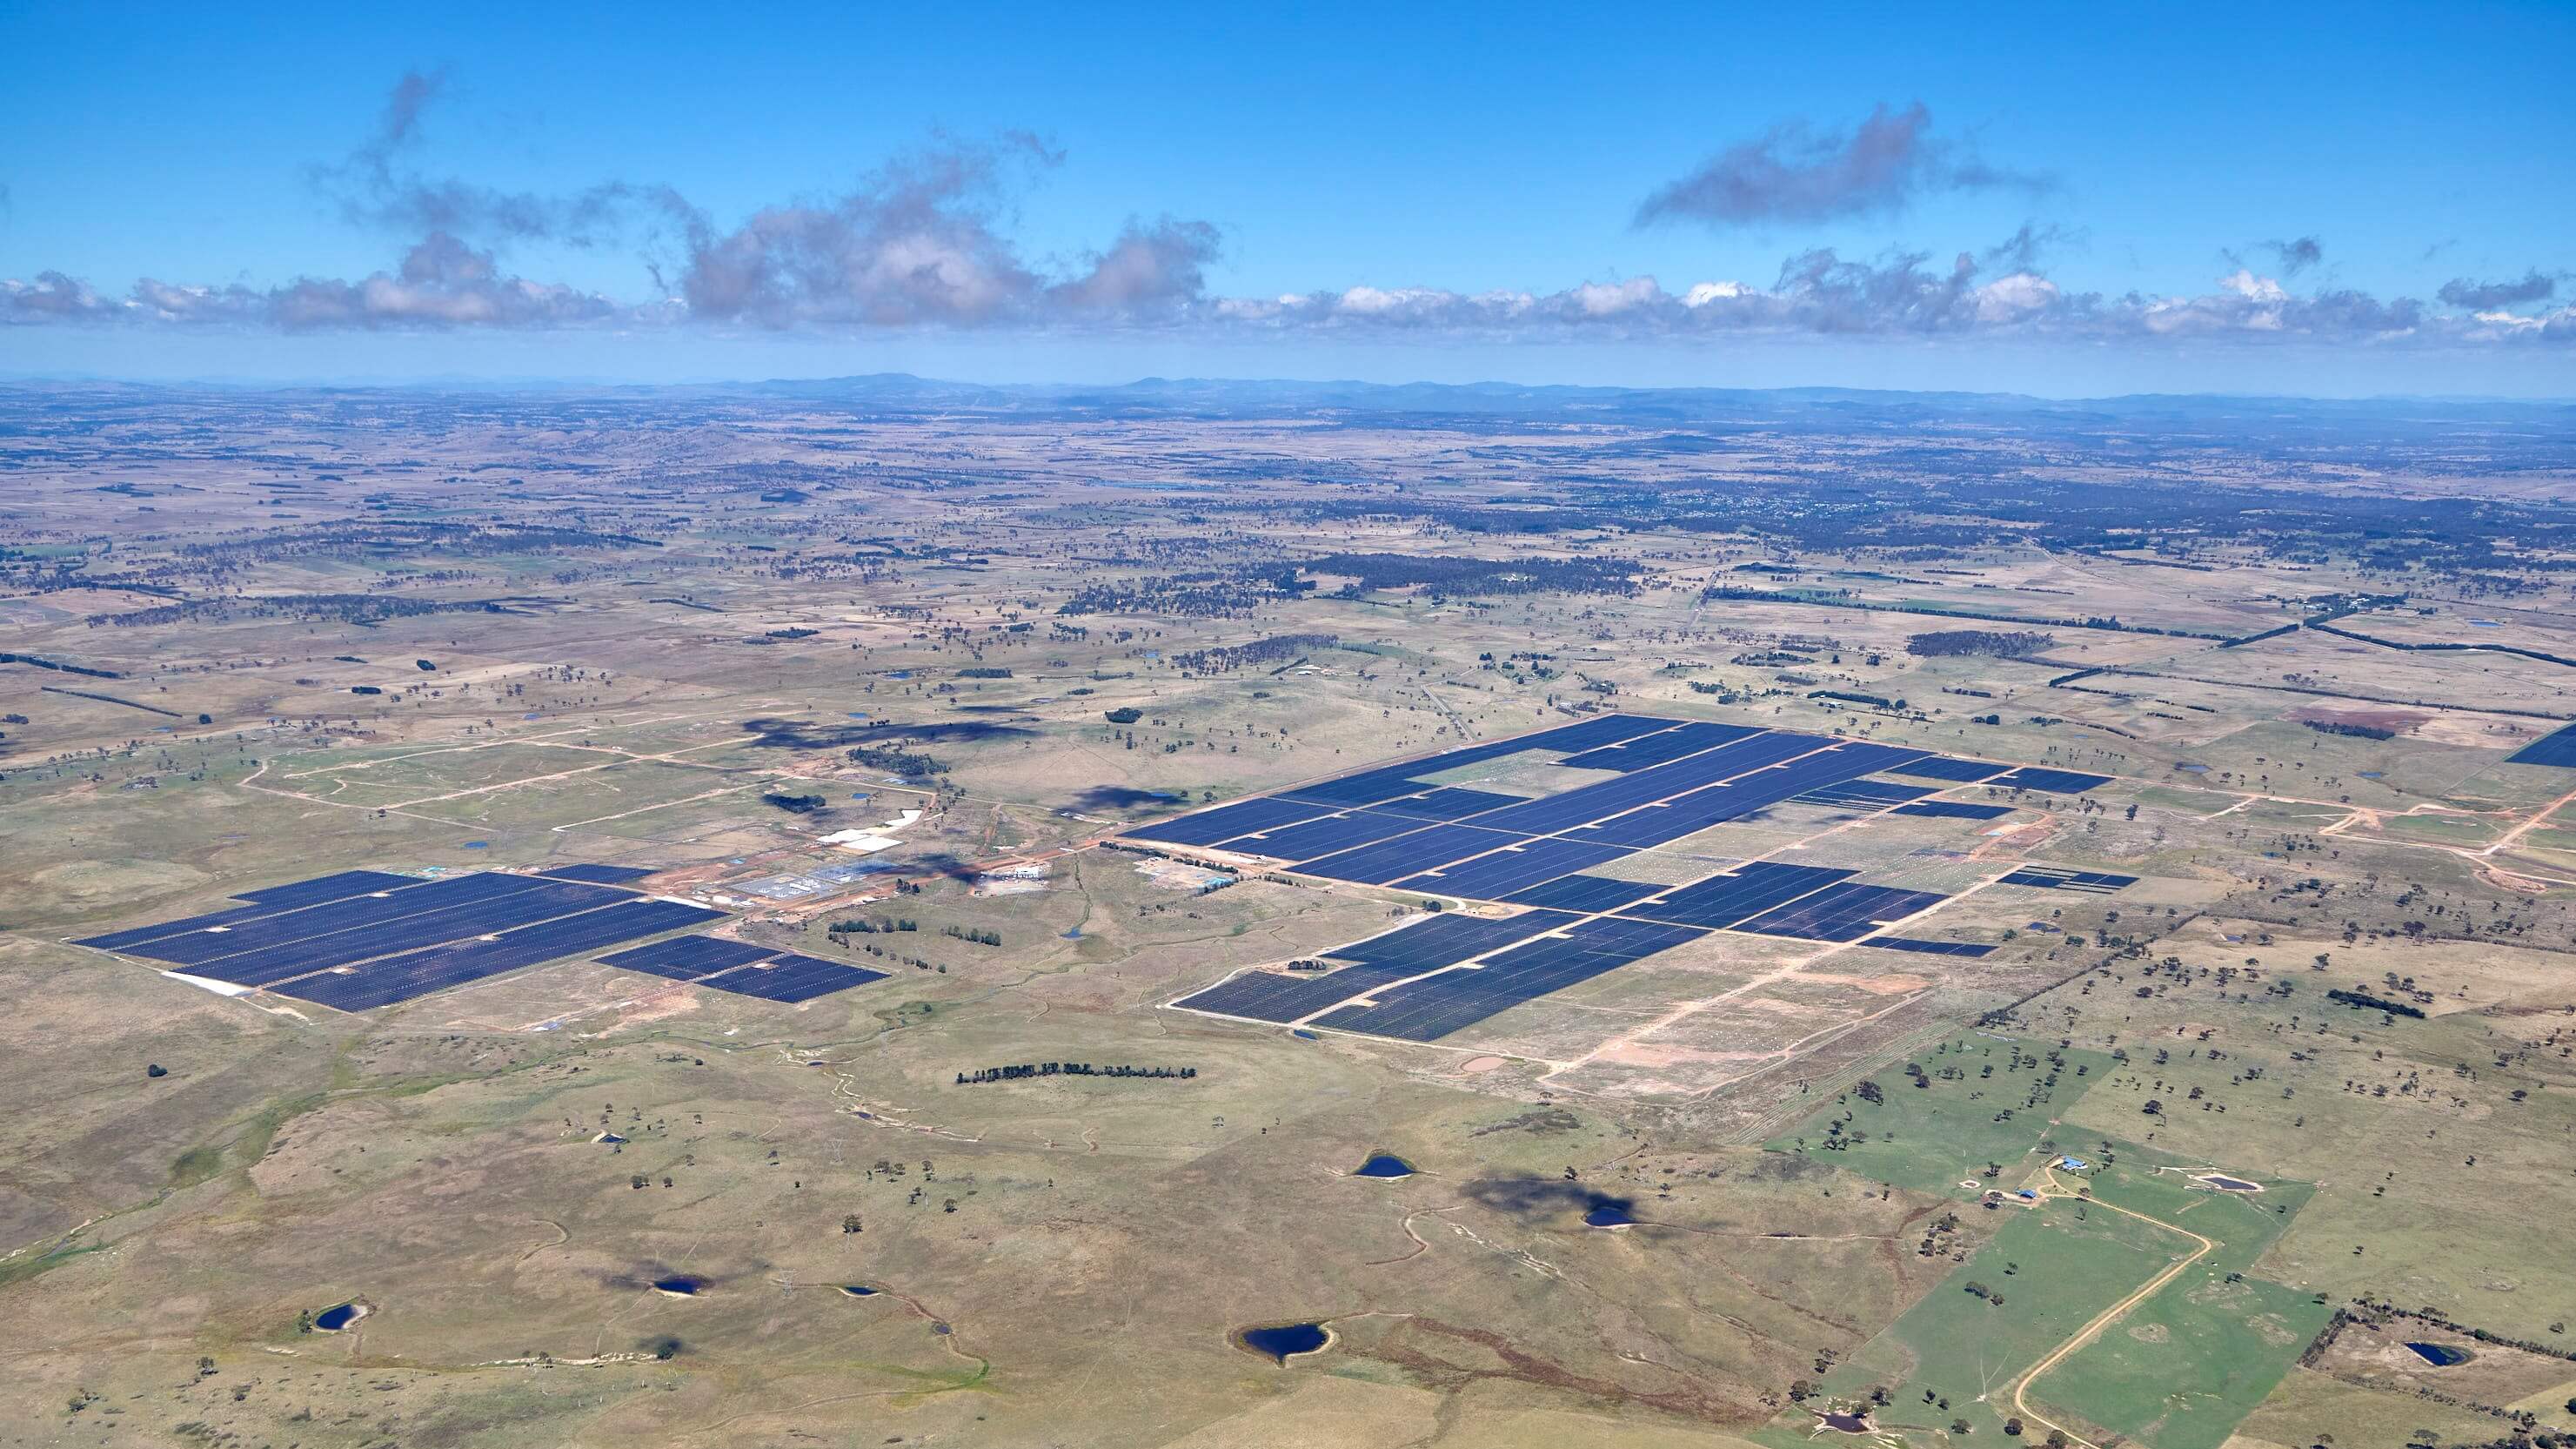 Aerial view over large solar farm in Australia